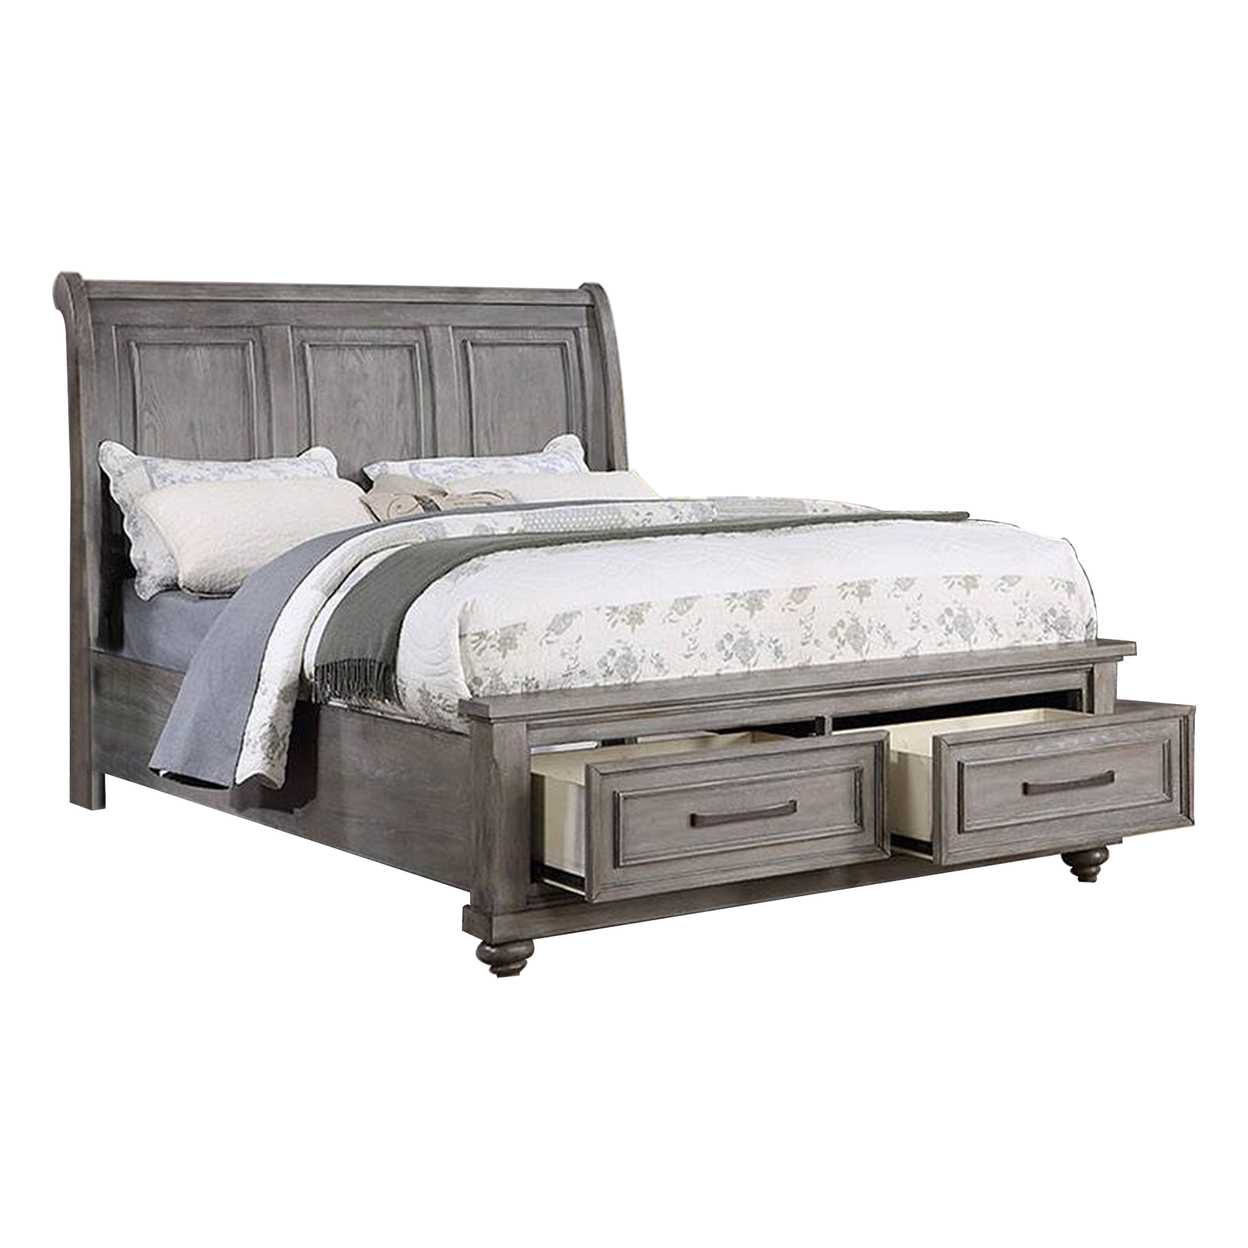 Demi Queen Size Bed, Sleigh Headboard, 2 Storage Drawers, Oak Gray Wood- Saltoro Sherpi